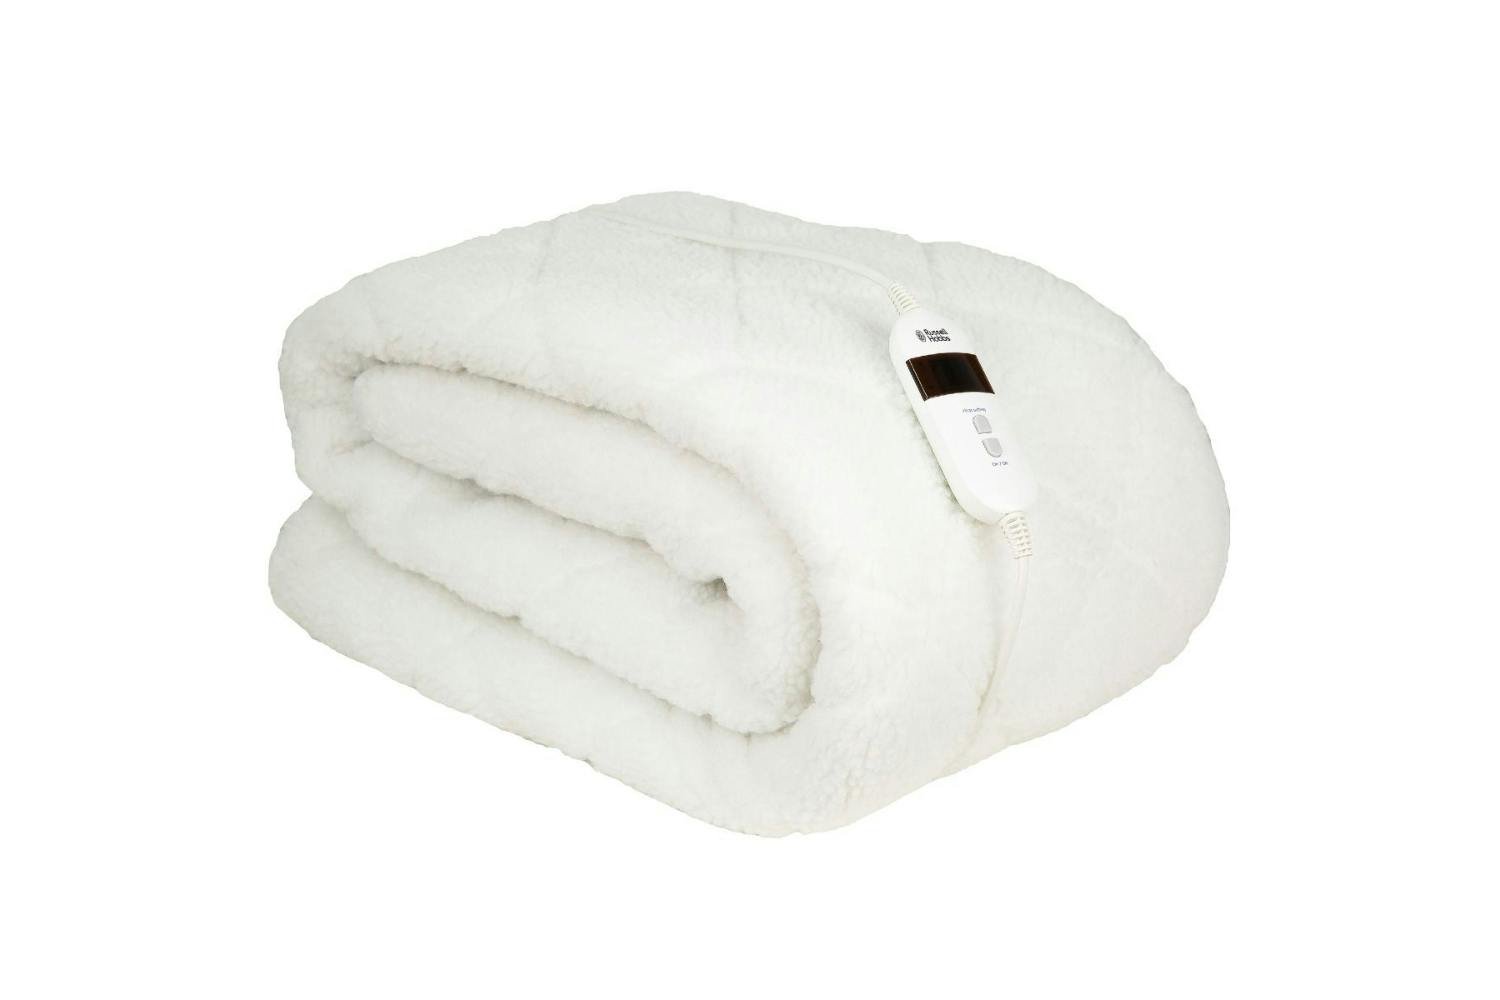 Russell Hobbs Luxury Sherpa Fleece Double Electric Heated Blanket | RHBDB8004